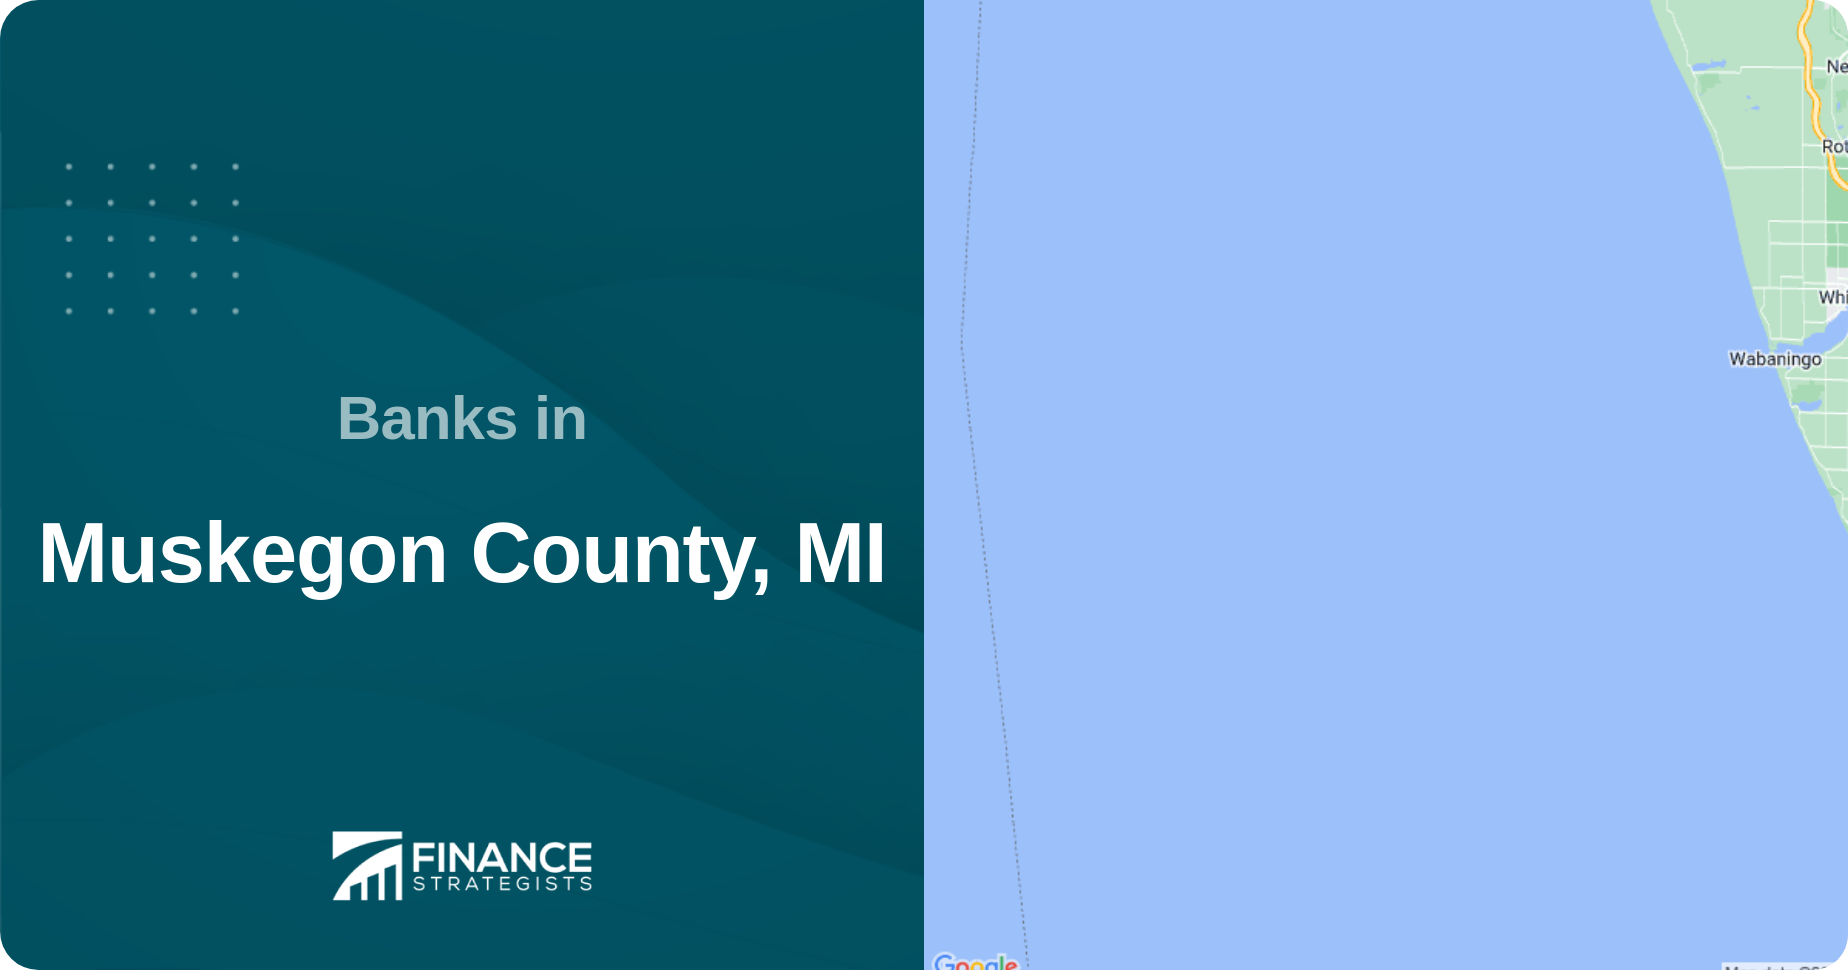 Banks in Muskegon County, MI